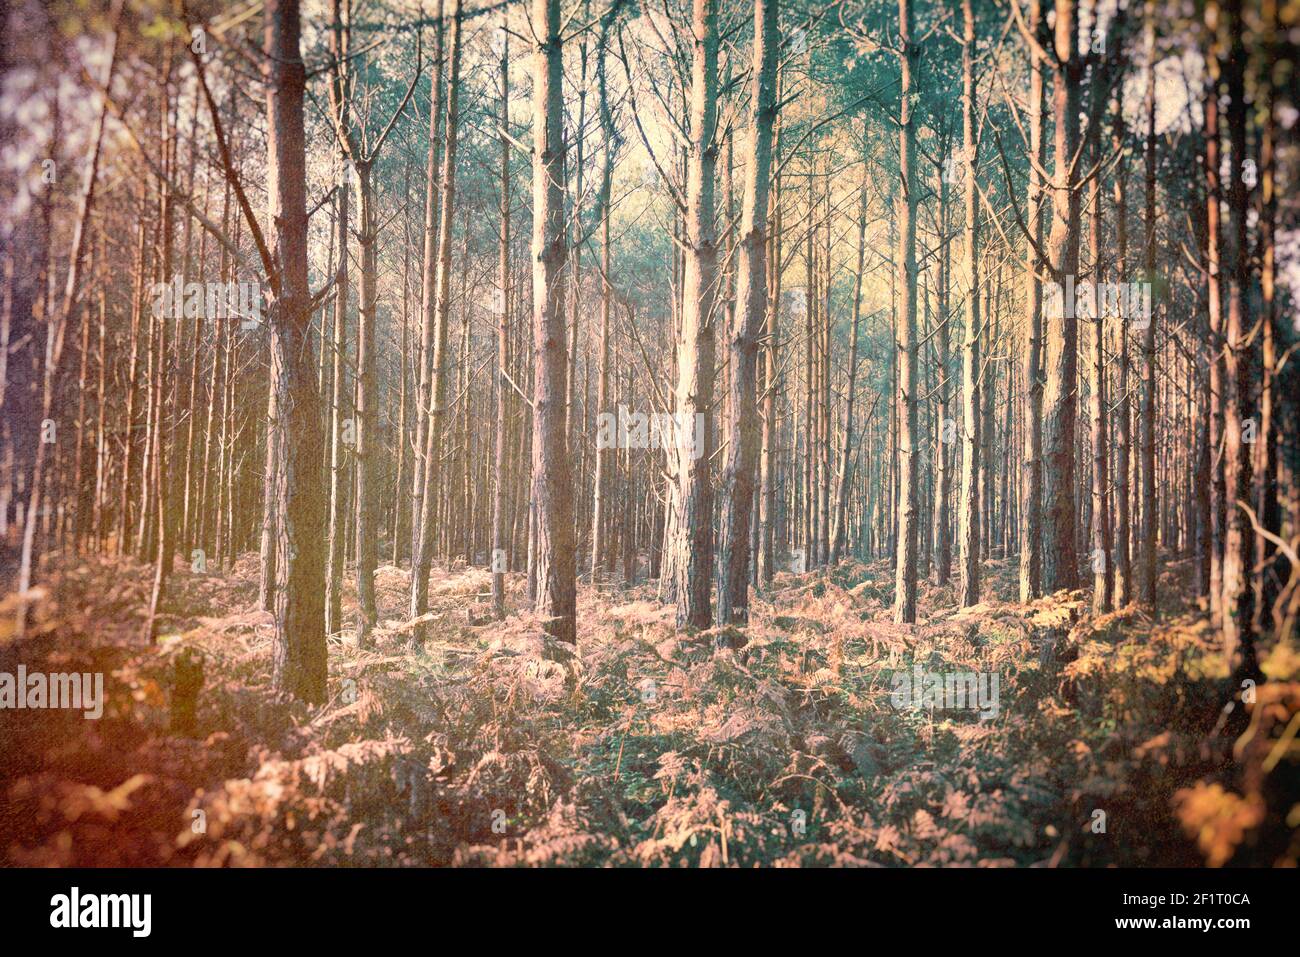 Pine woods during the season of autumn with bracken Stock Photo